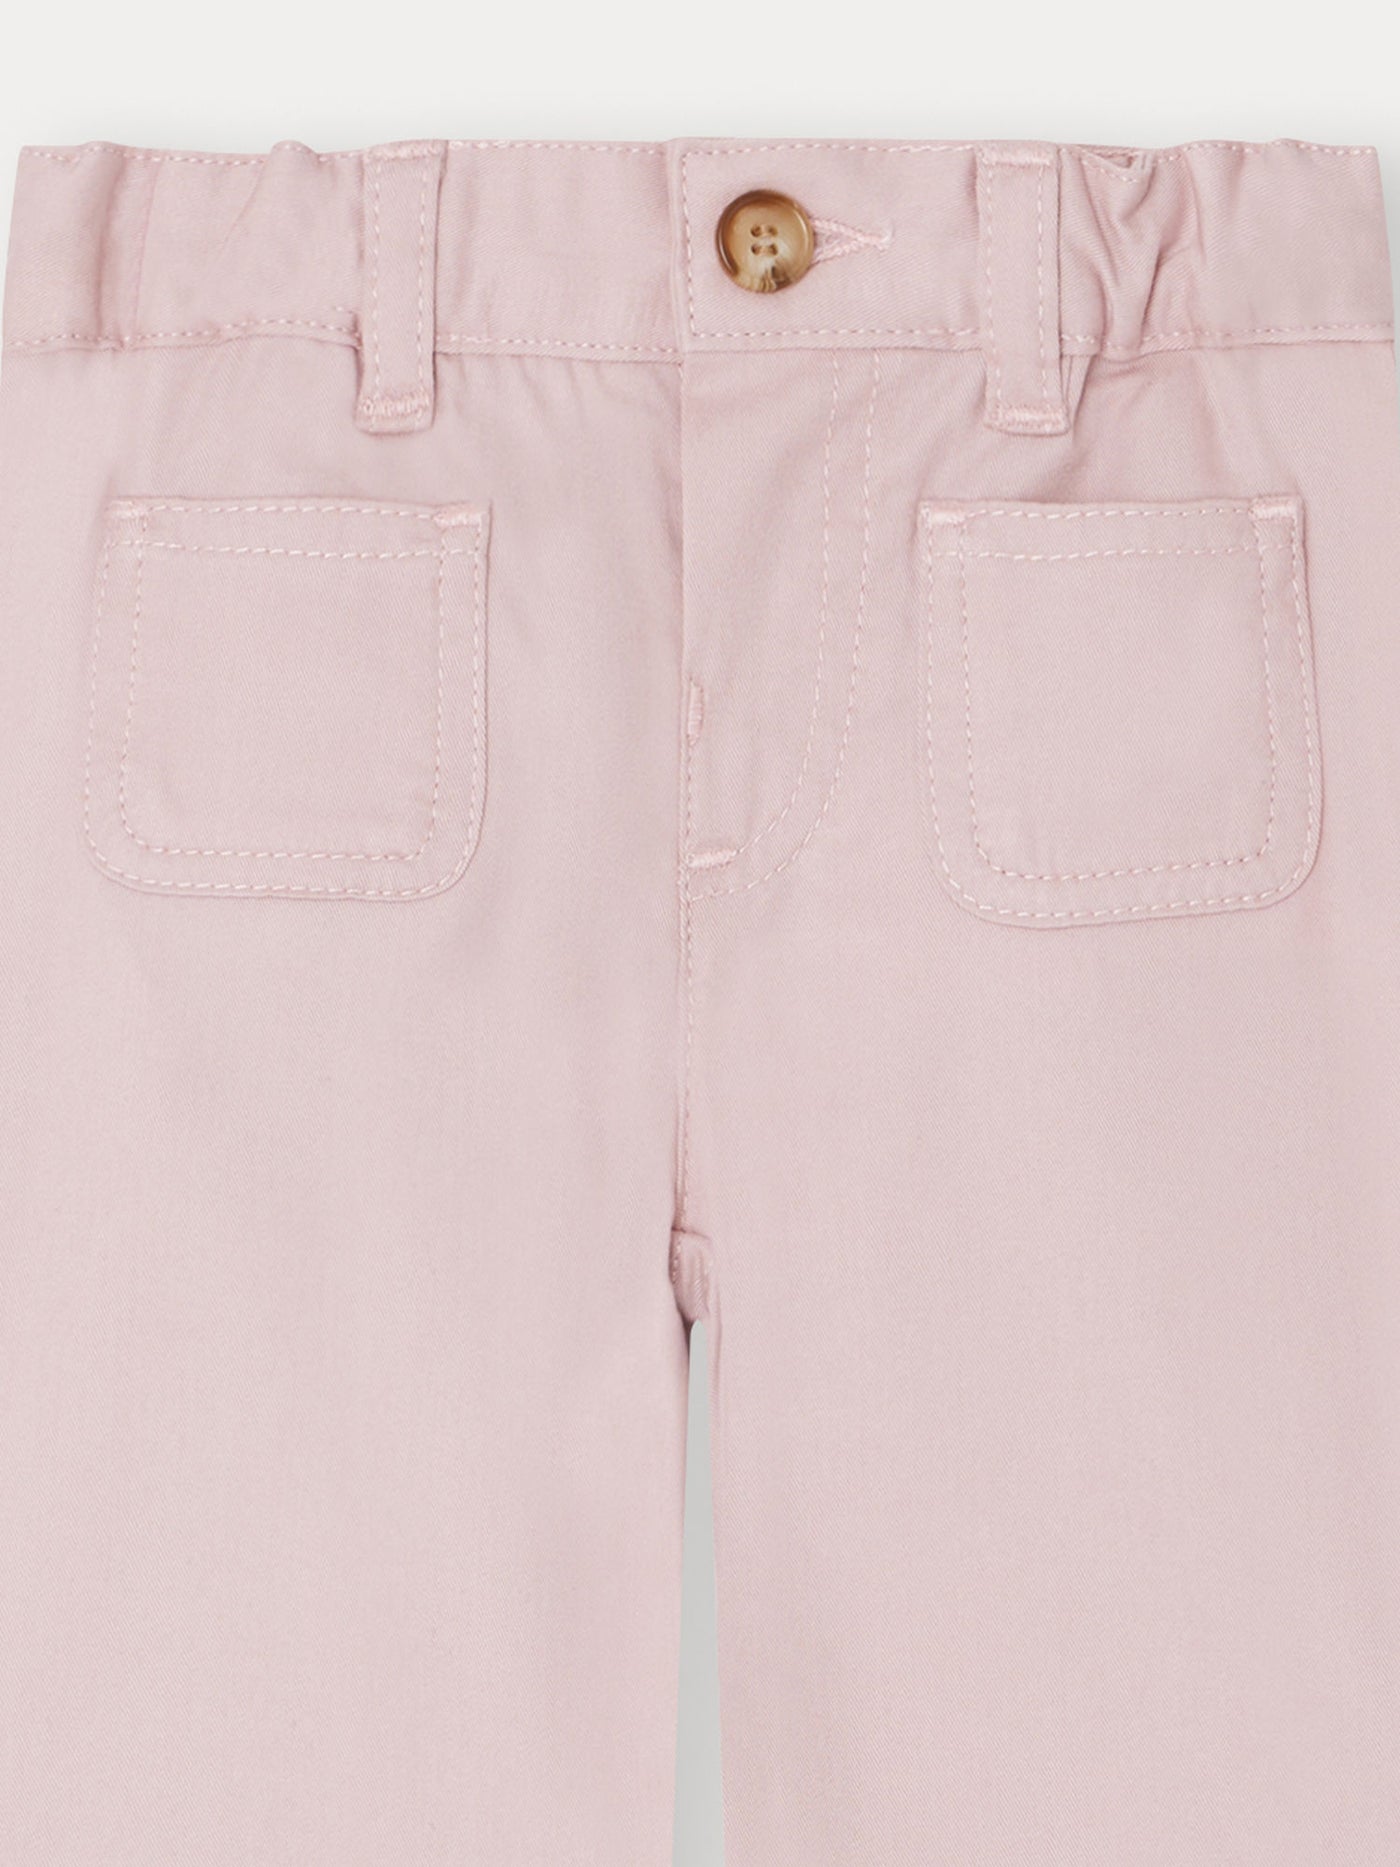 Bellino Pants faded pink